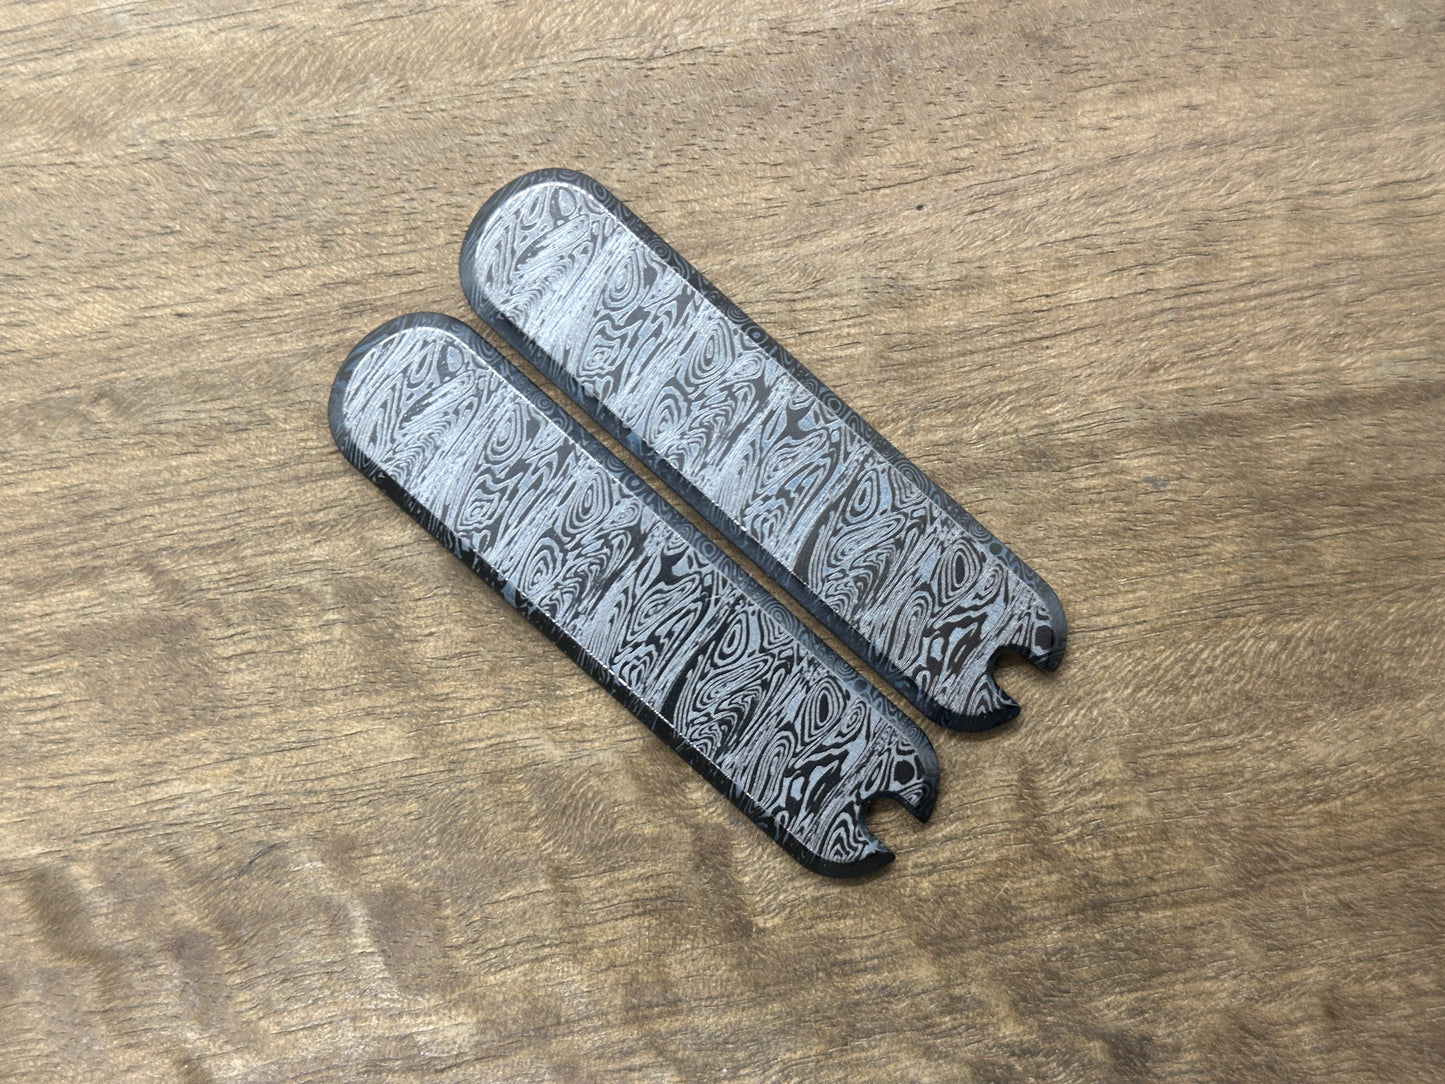 Black Dama HEIMSKRINGL pattern engraved 58mm Titanium Scales for Swiss Army SAK